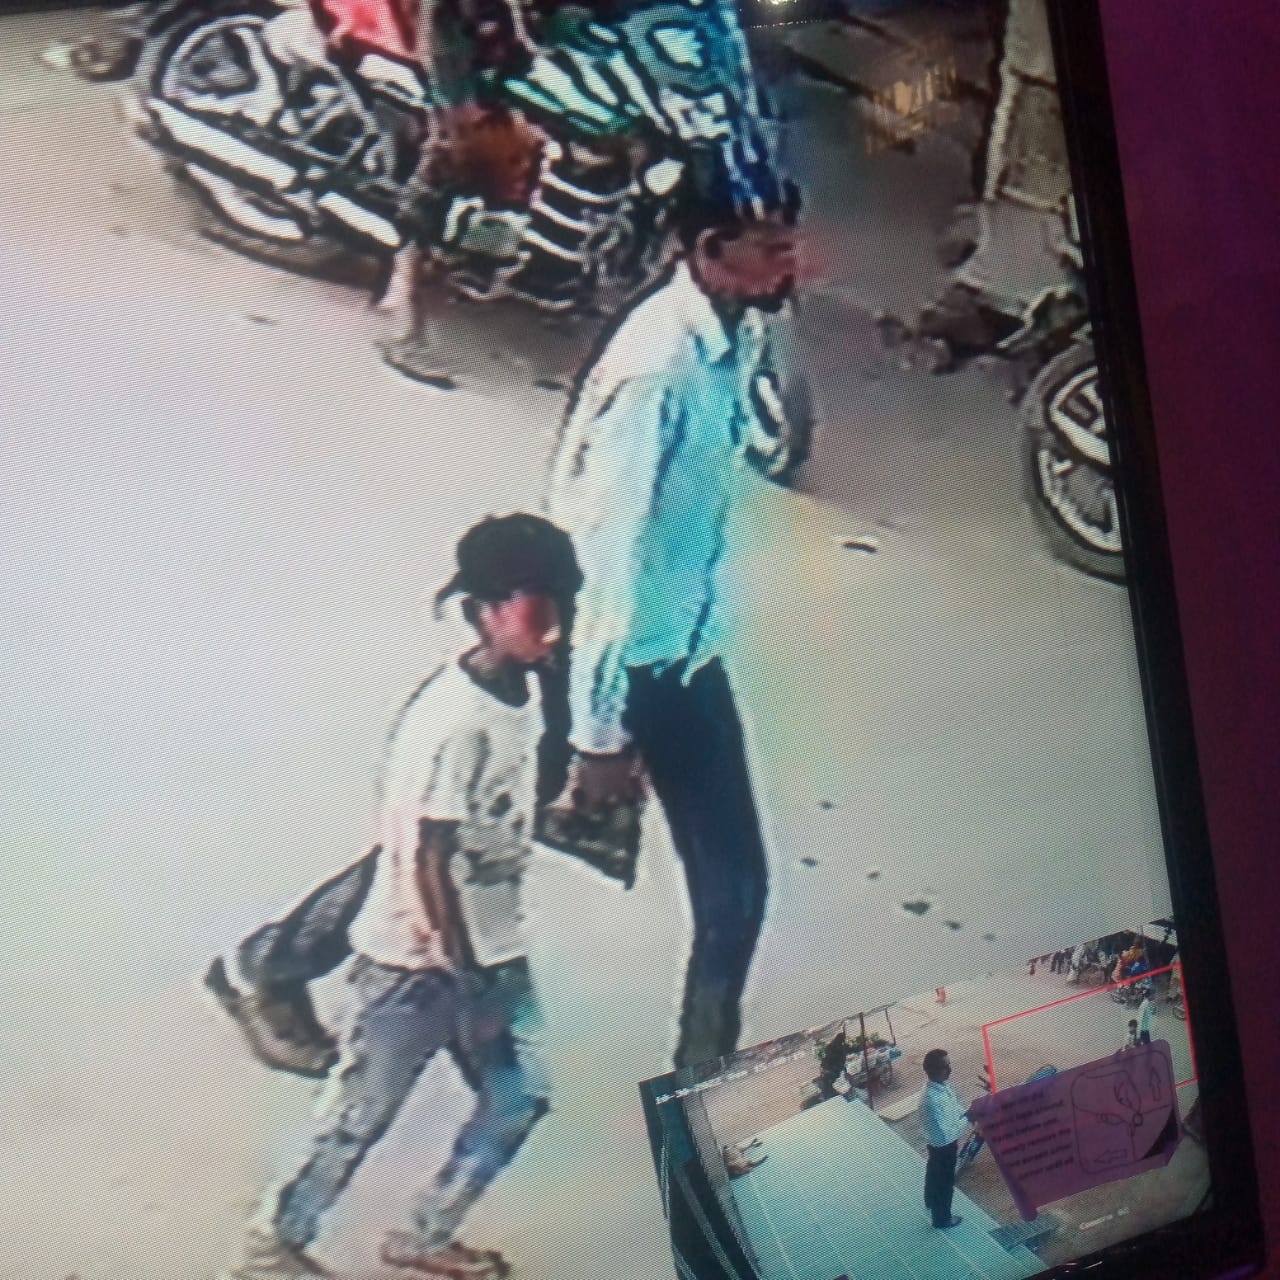 minor kidnapped in shivpuri